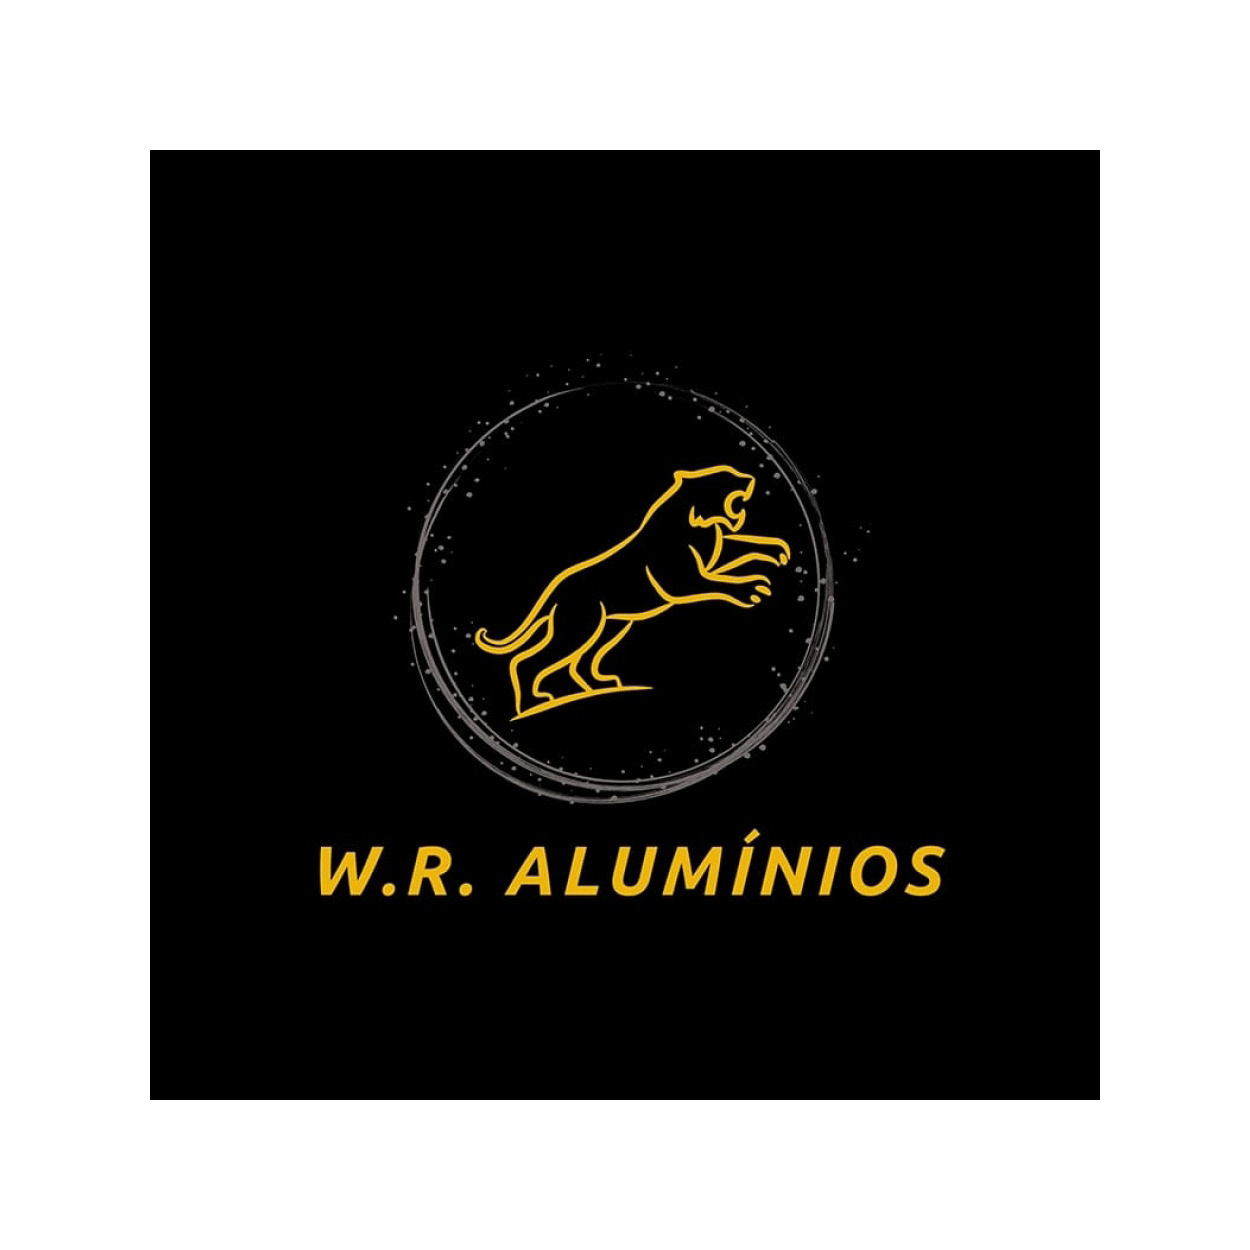 Associado ABUP - W.R ALUMÍNIOS